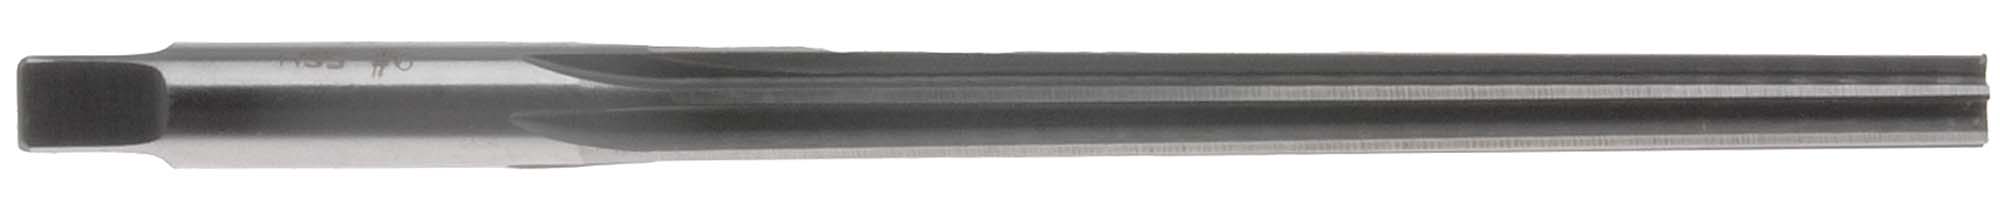 #0 Straight Flute Taper Pin Reamer, High Speed Steel